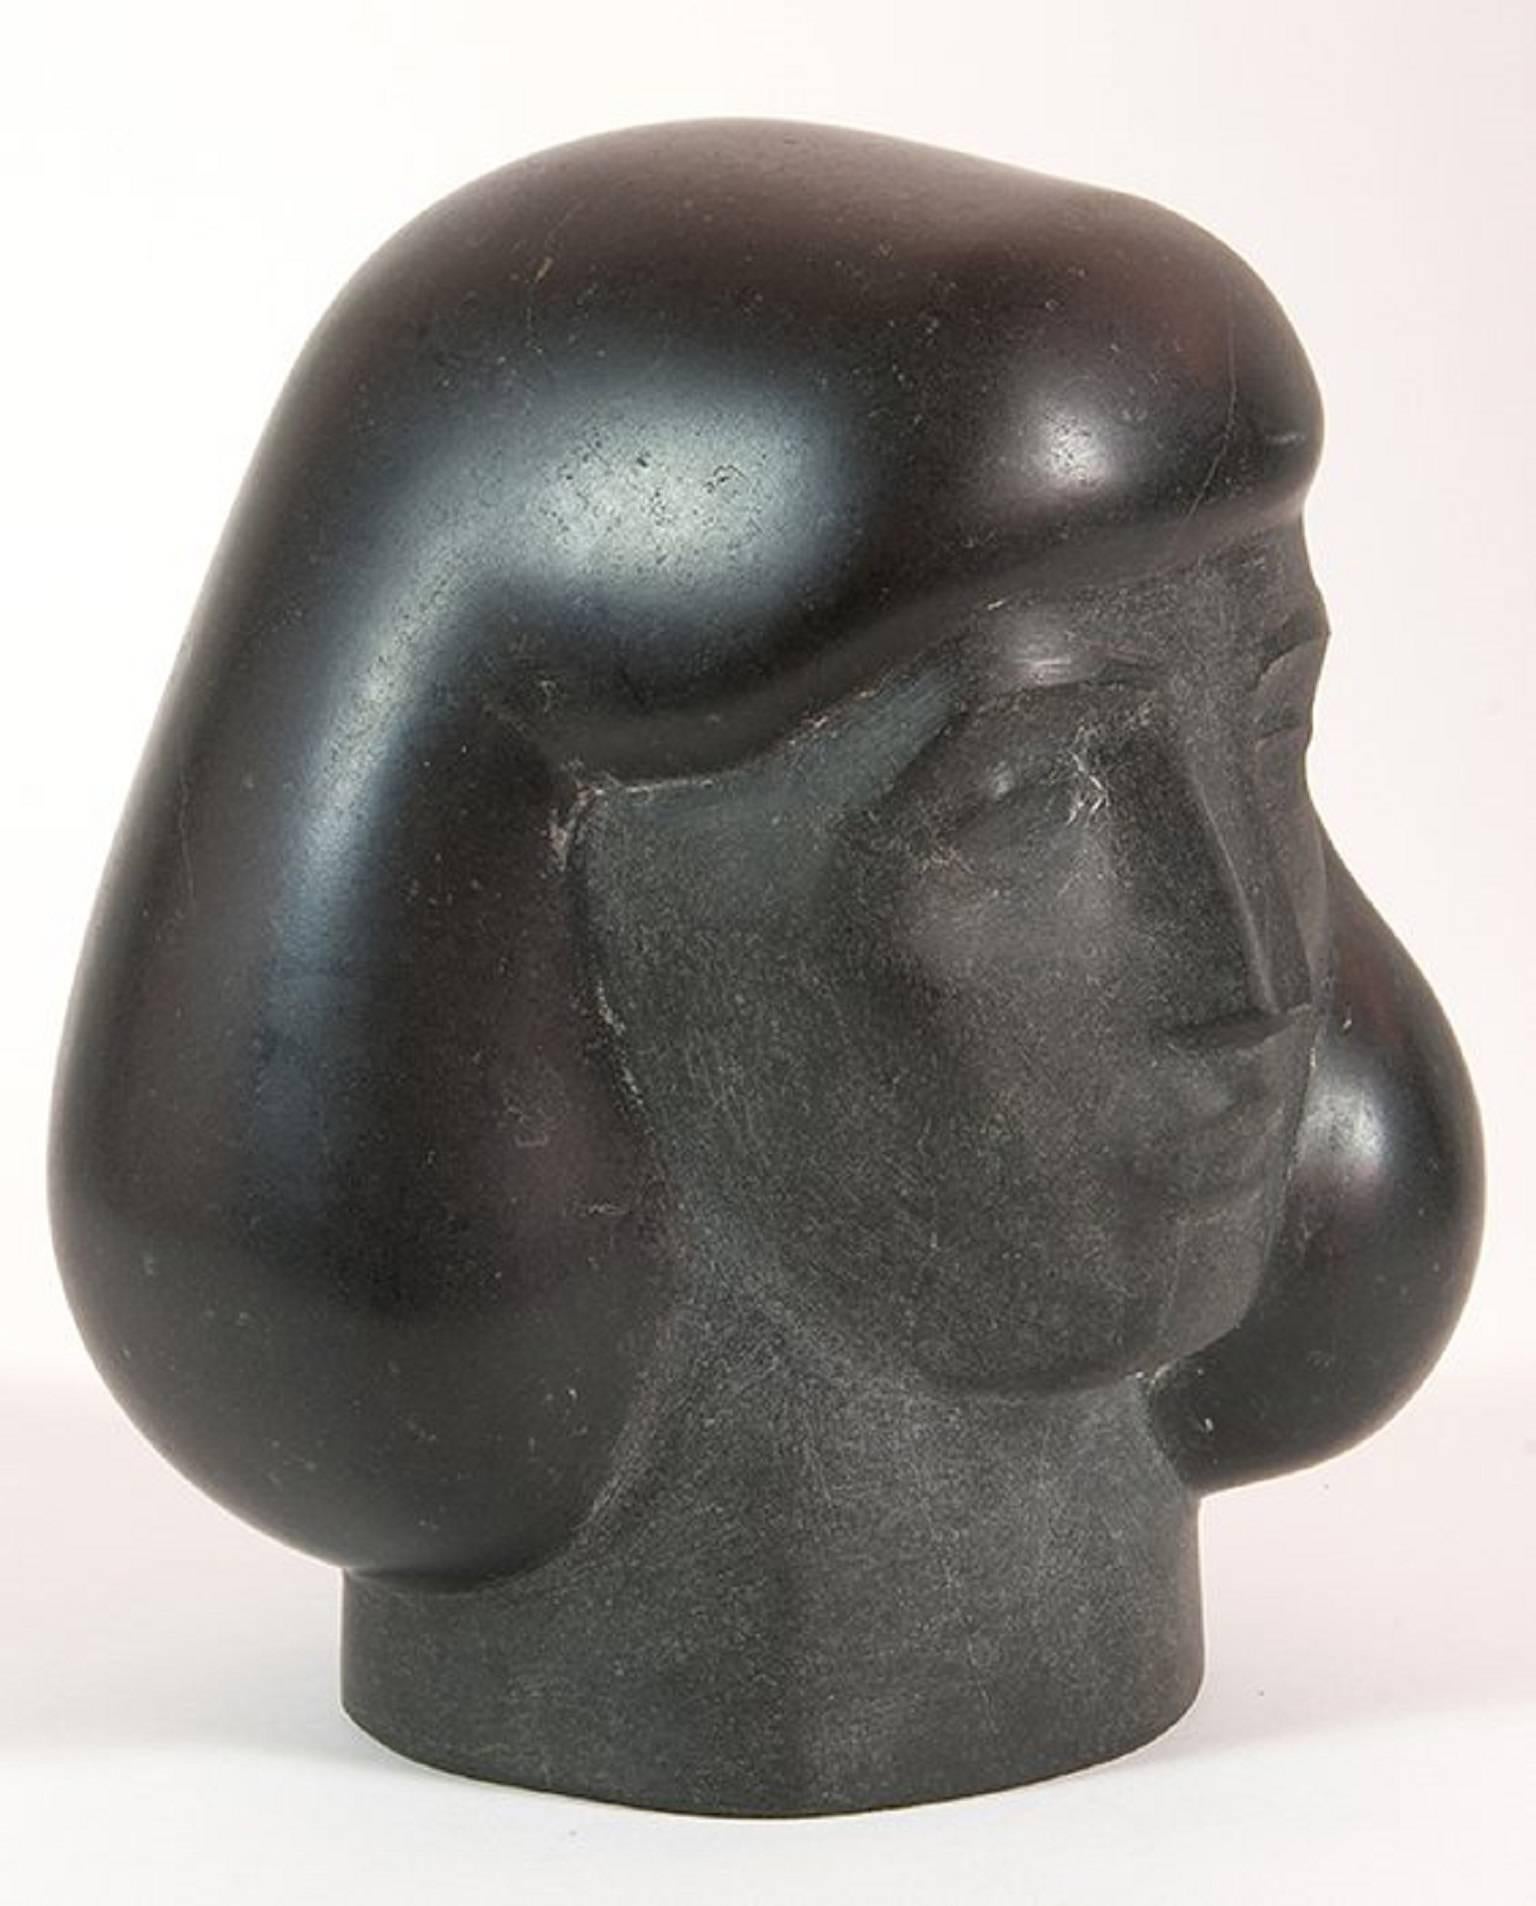 Dark granite sculpture of a woman's head by Walter Dreisbach (1929-2015) 

Signed on underside 